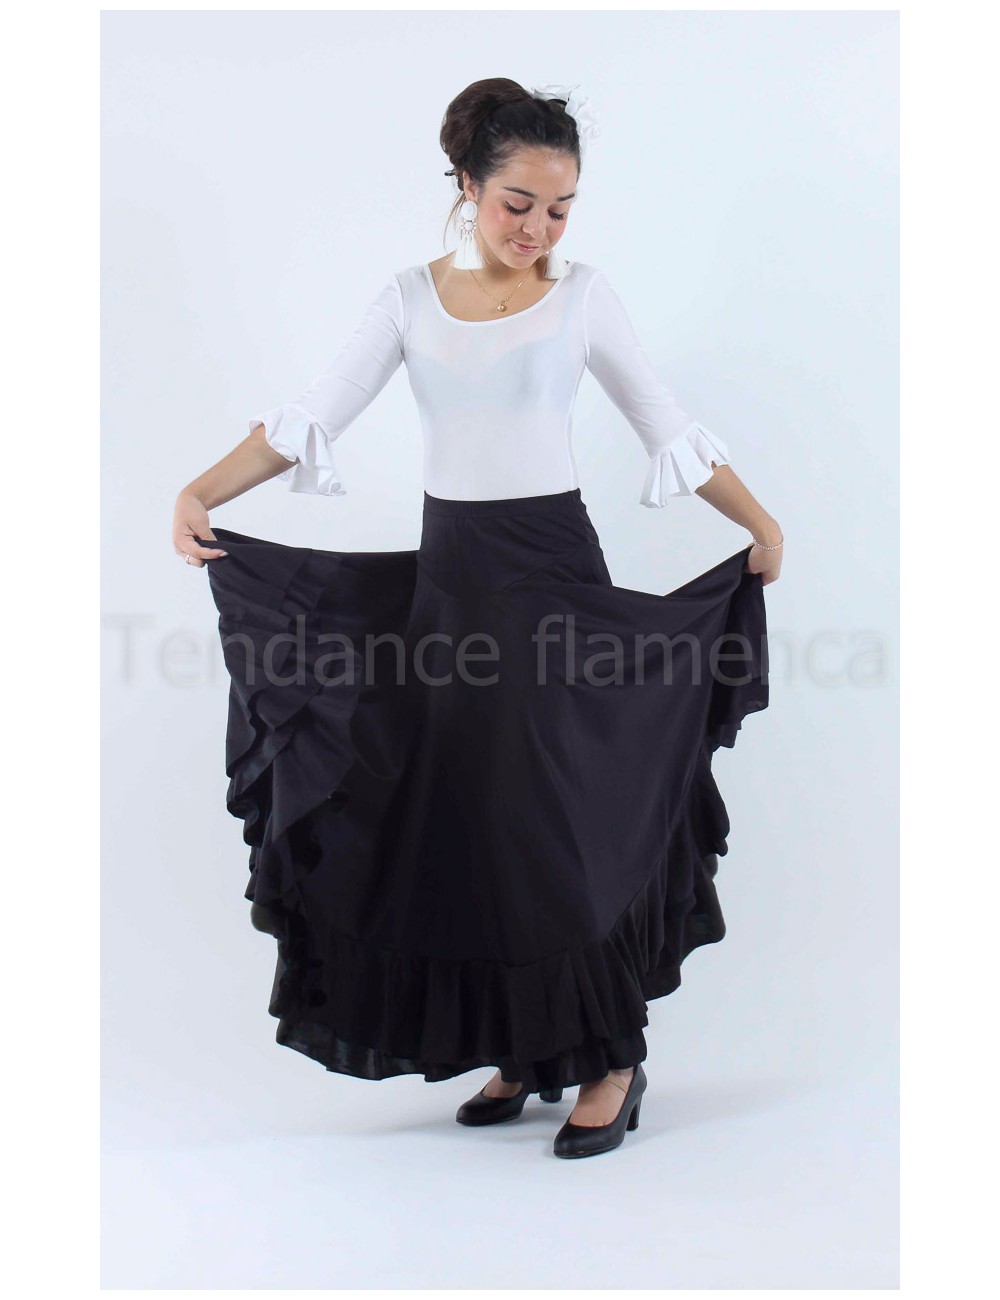 kit body flamenco  negra 1